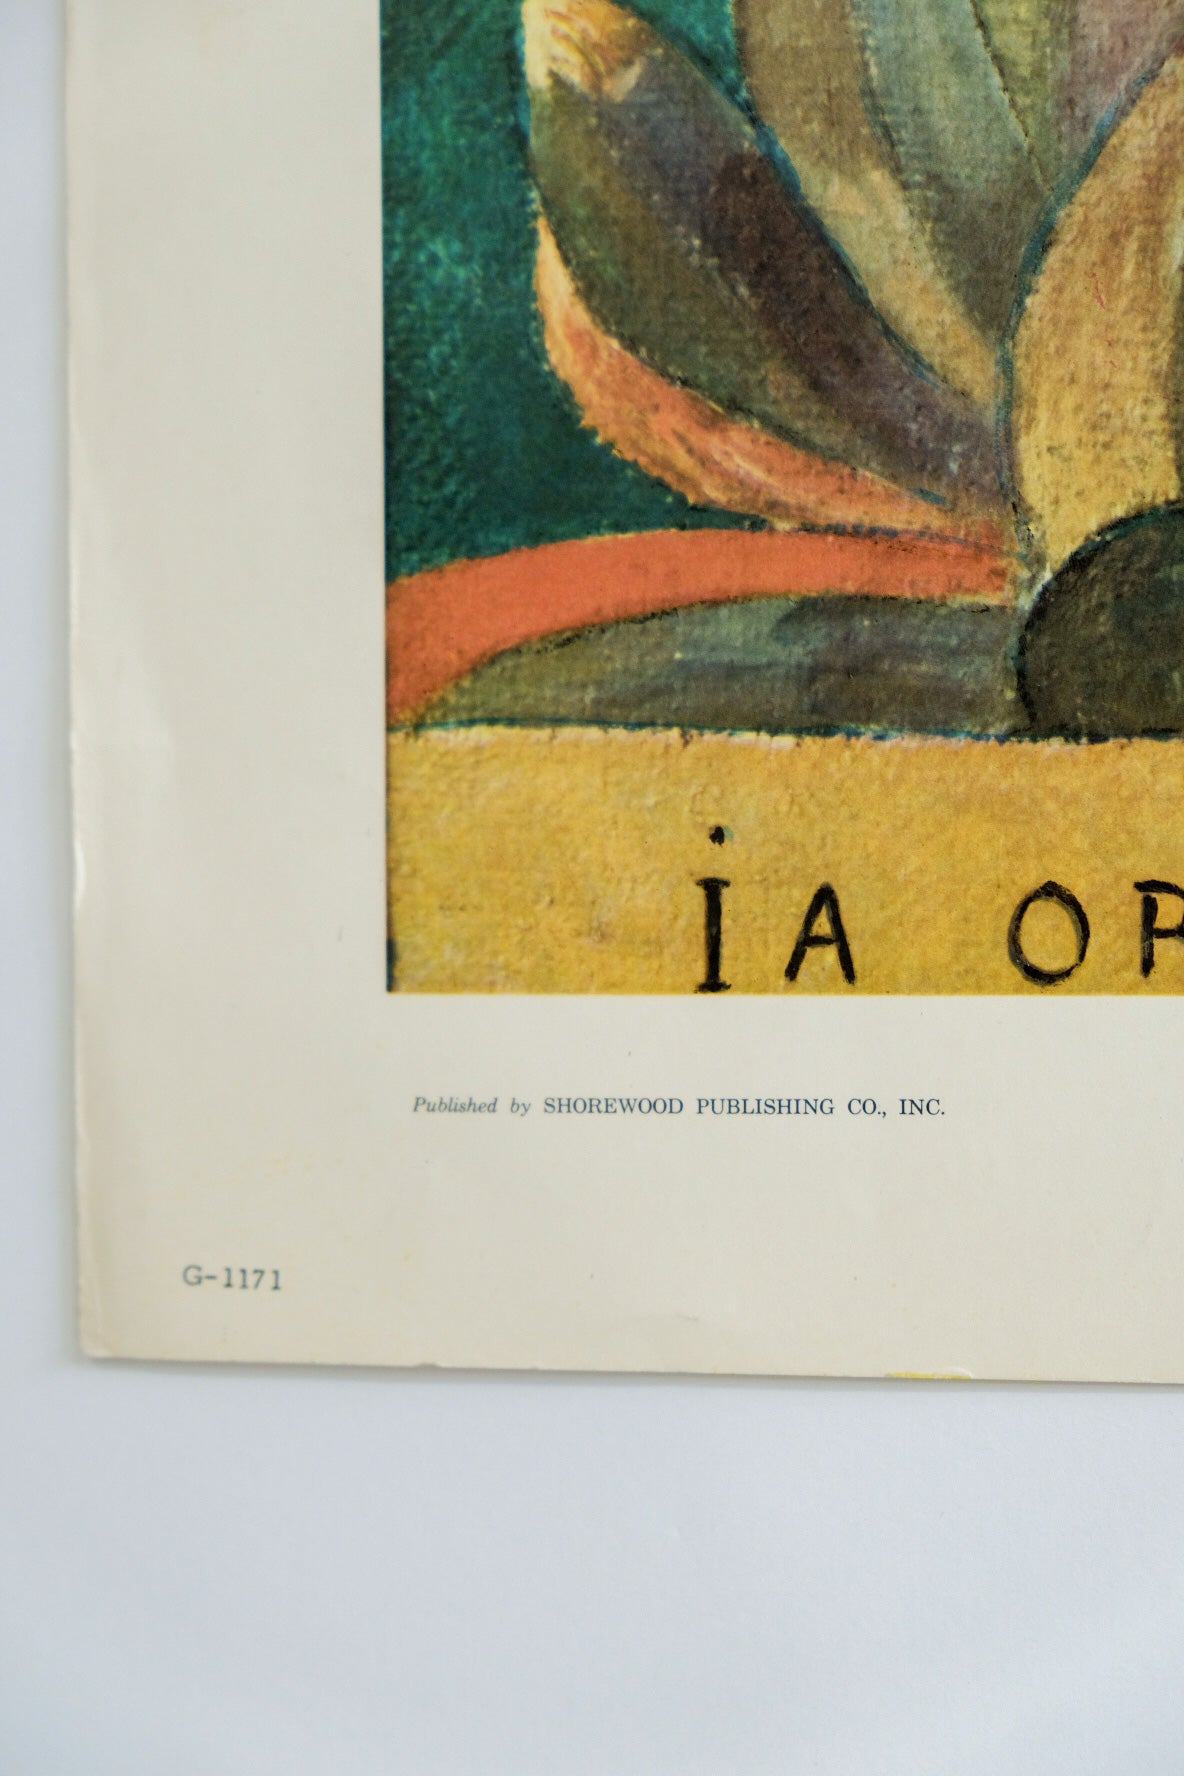 Paul Gauguin "Ia Orana Maria" (Hail Mary)